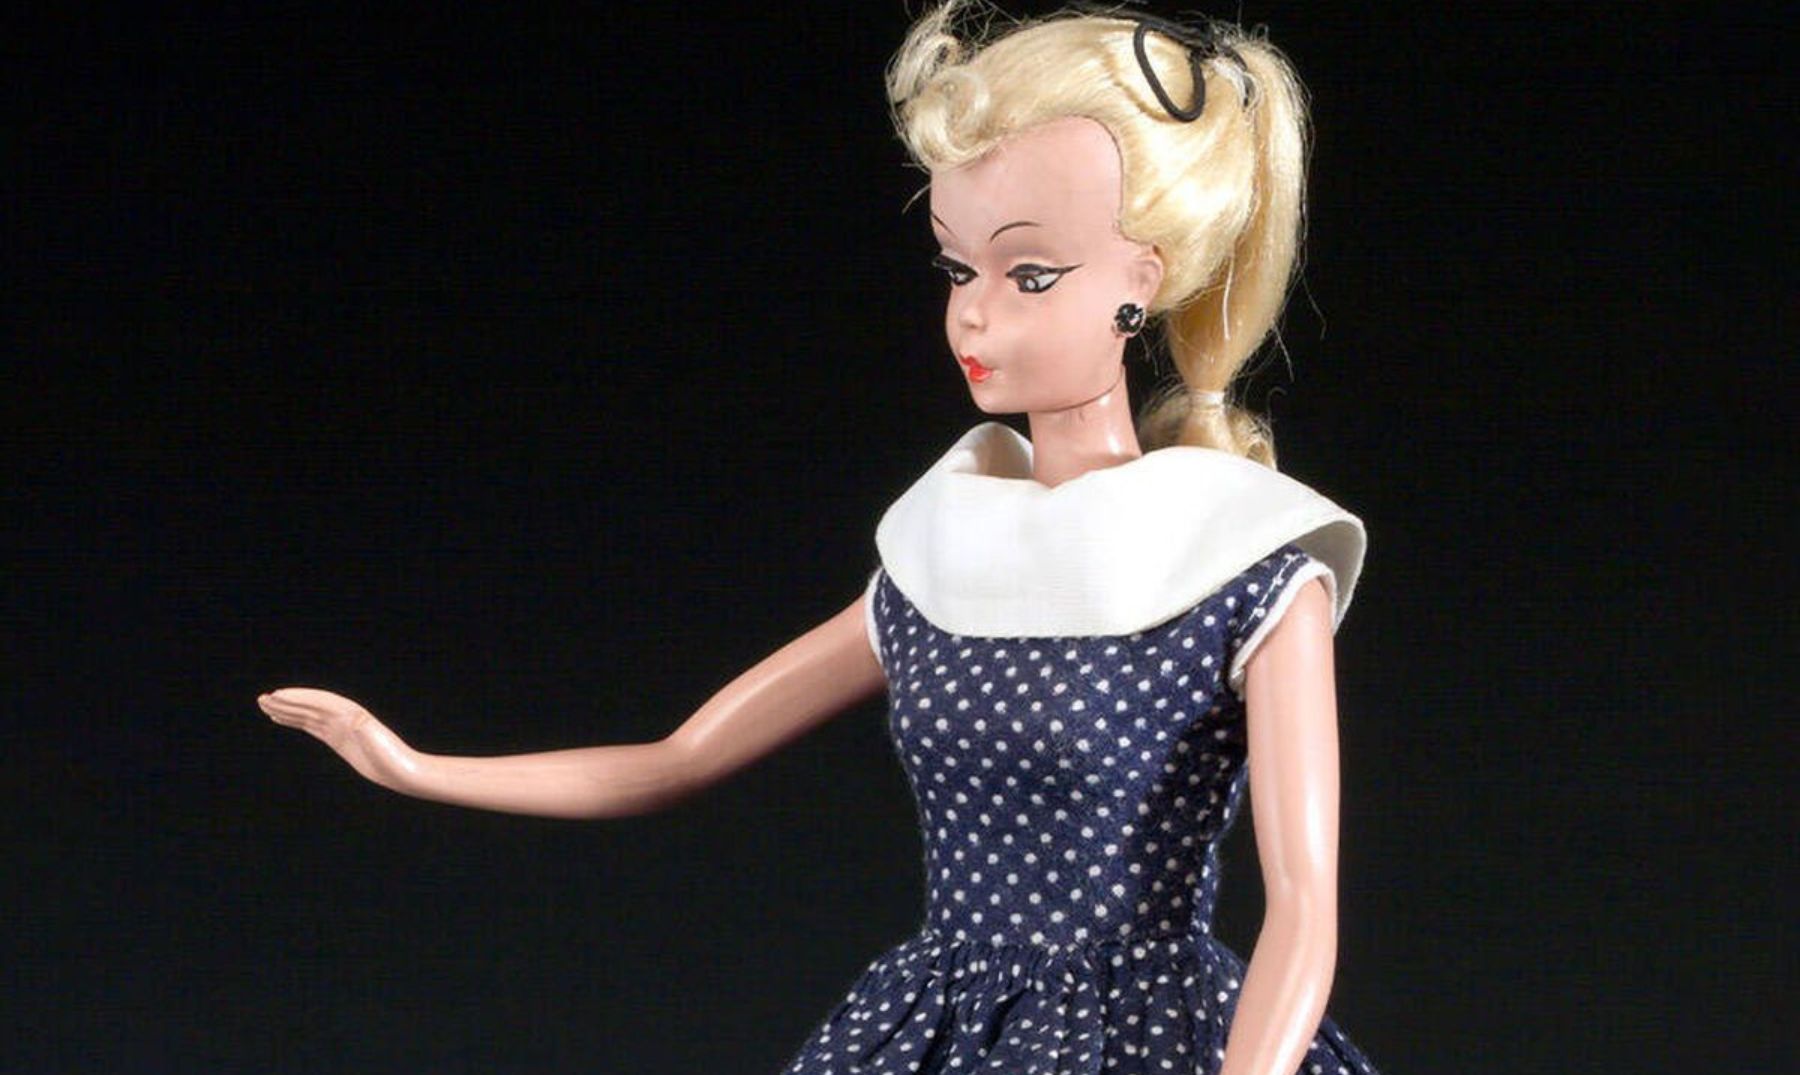 Bild Lilli doll, la Barbie original considerada un juguete sexual